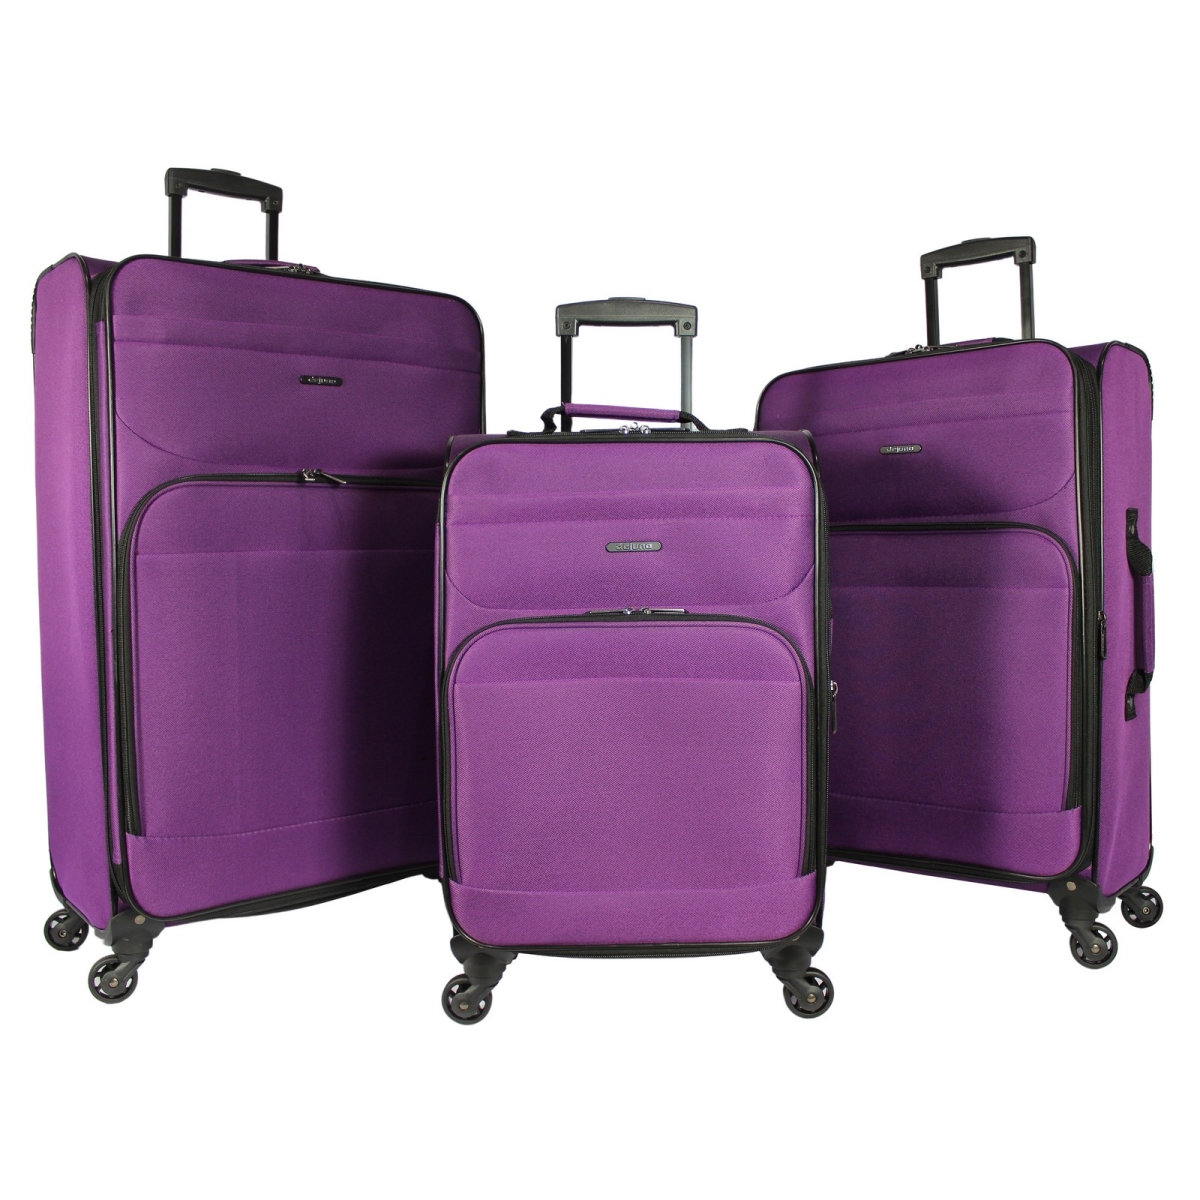 Picture of Dejuno 252104DJ-PURPLE Lisbon Lightweight Expandable Spinner Luggage Set, Purple - 3 Piece